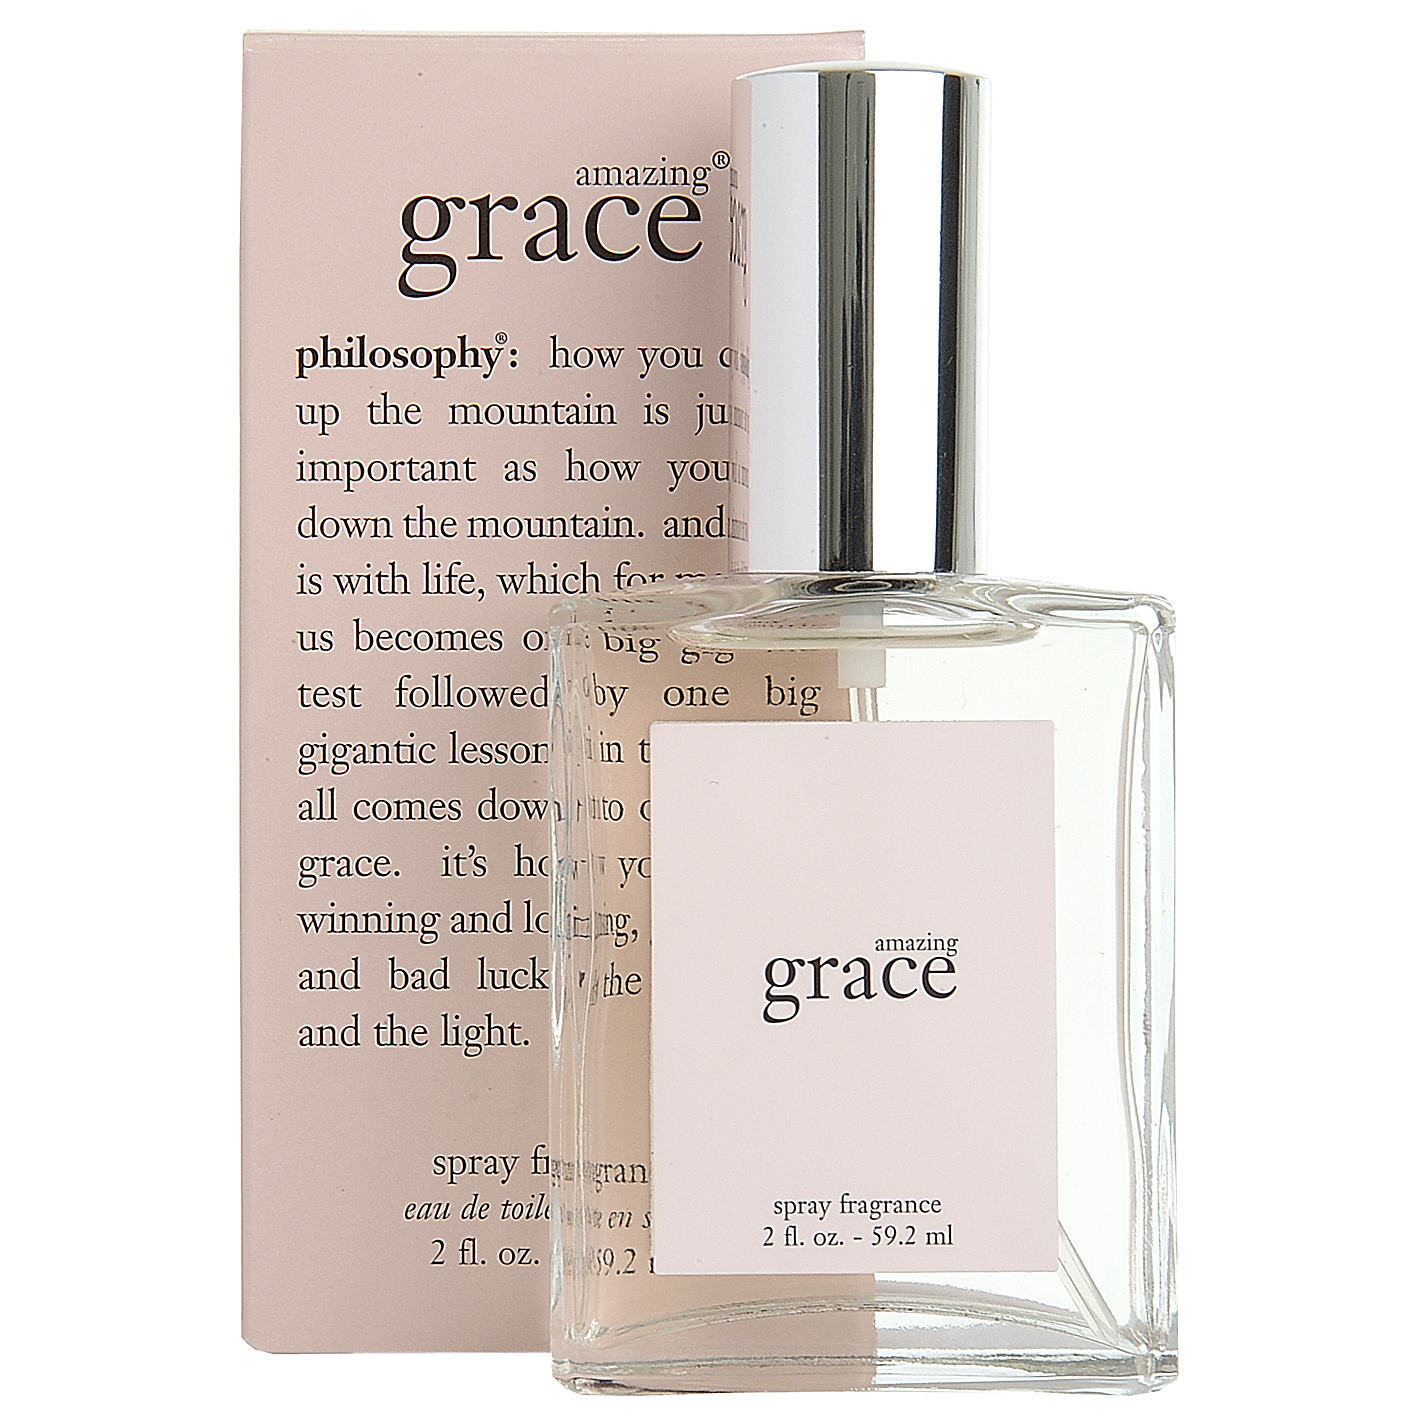 Amazing Grace by Philosophy Philosophy Fragrance Perfumery